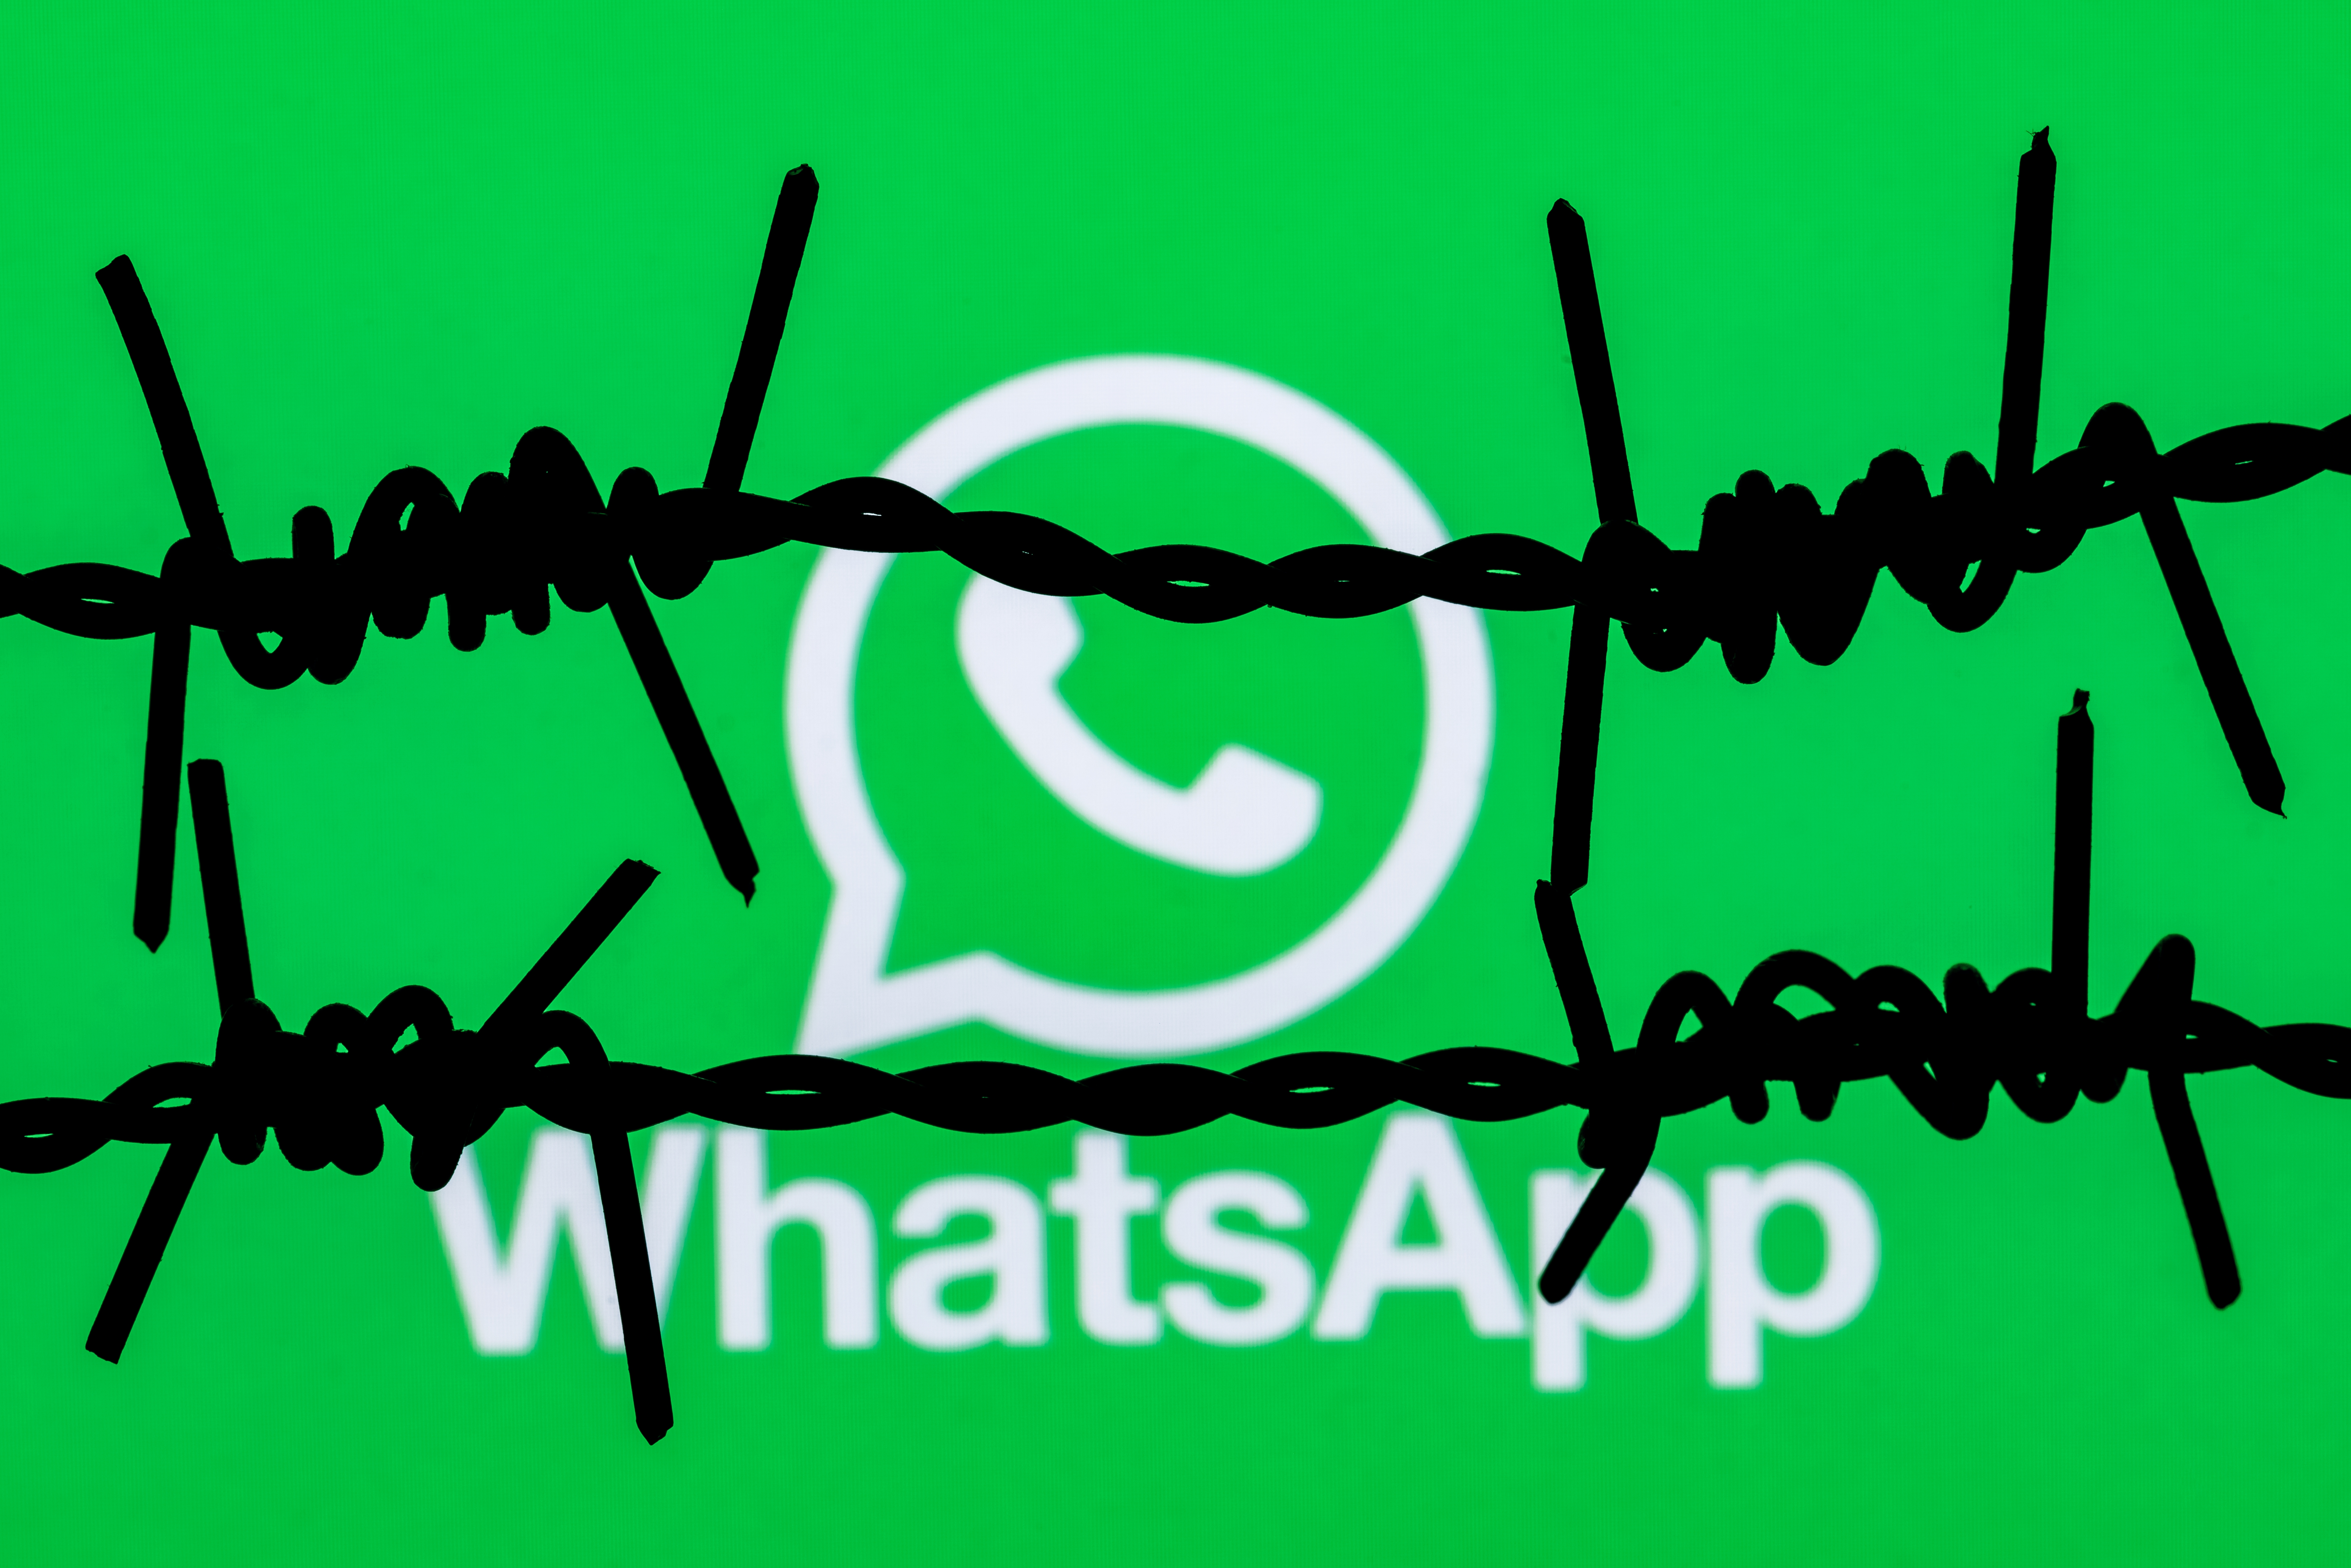  Escort-Girls: WhatsApp just blocked your number?